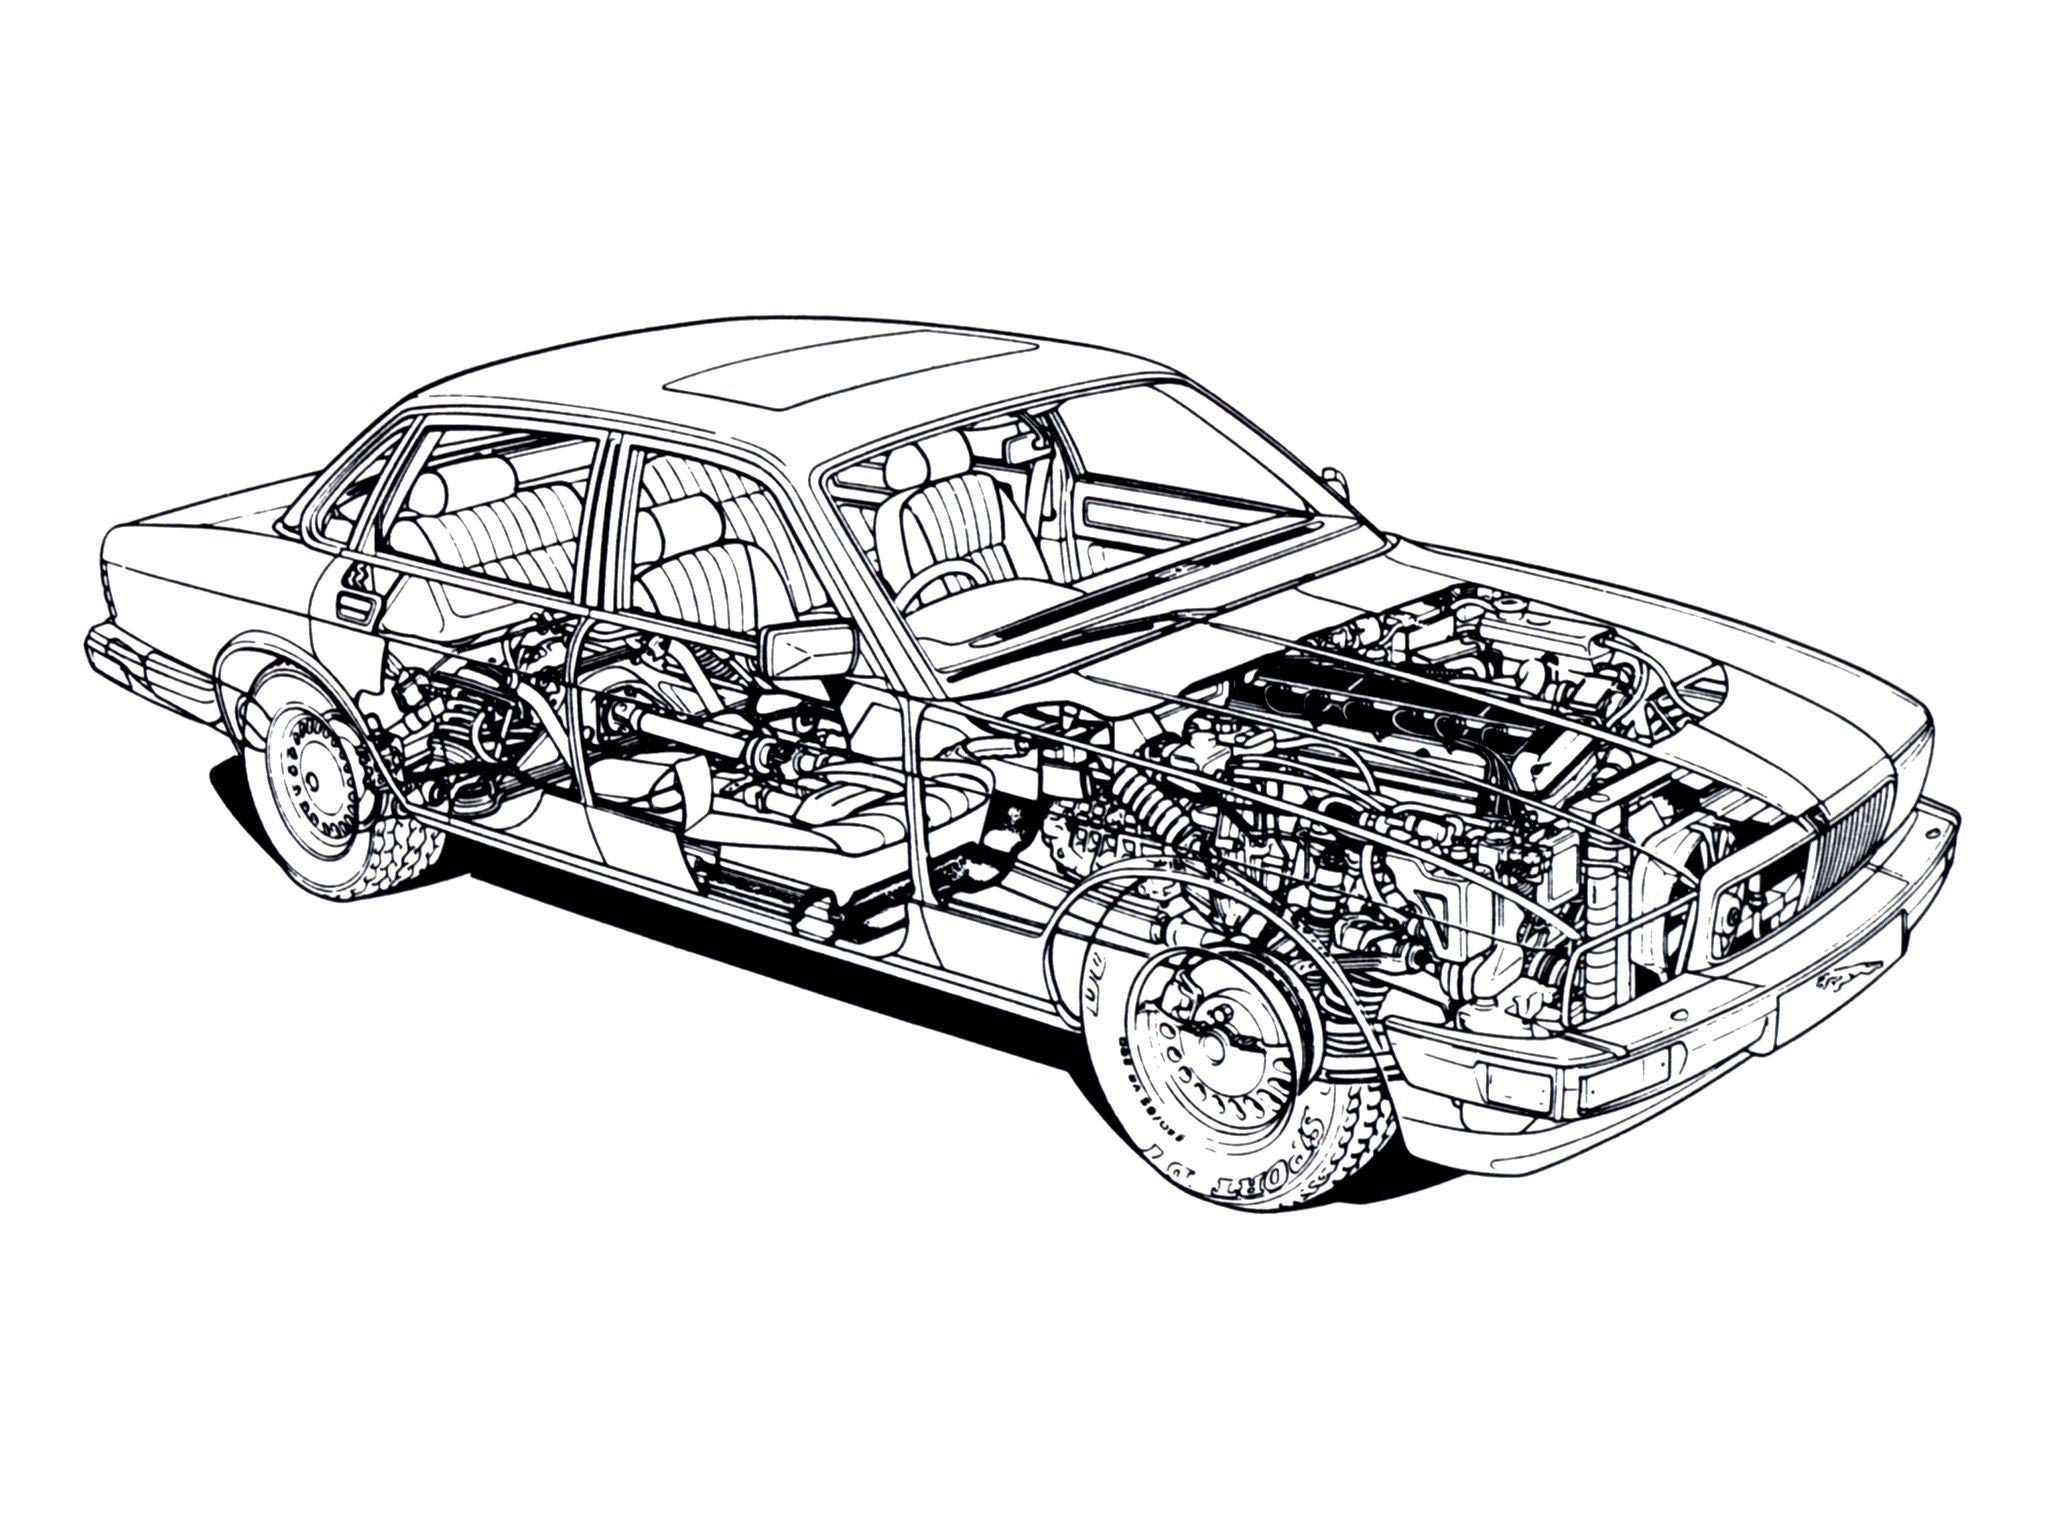 Jaguar Sovereign cutaway drawing